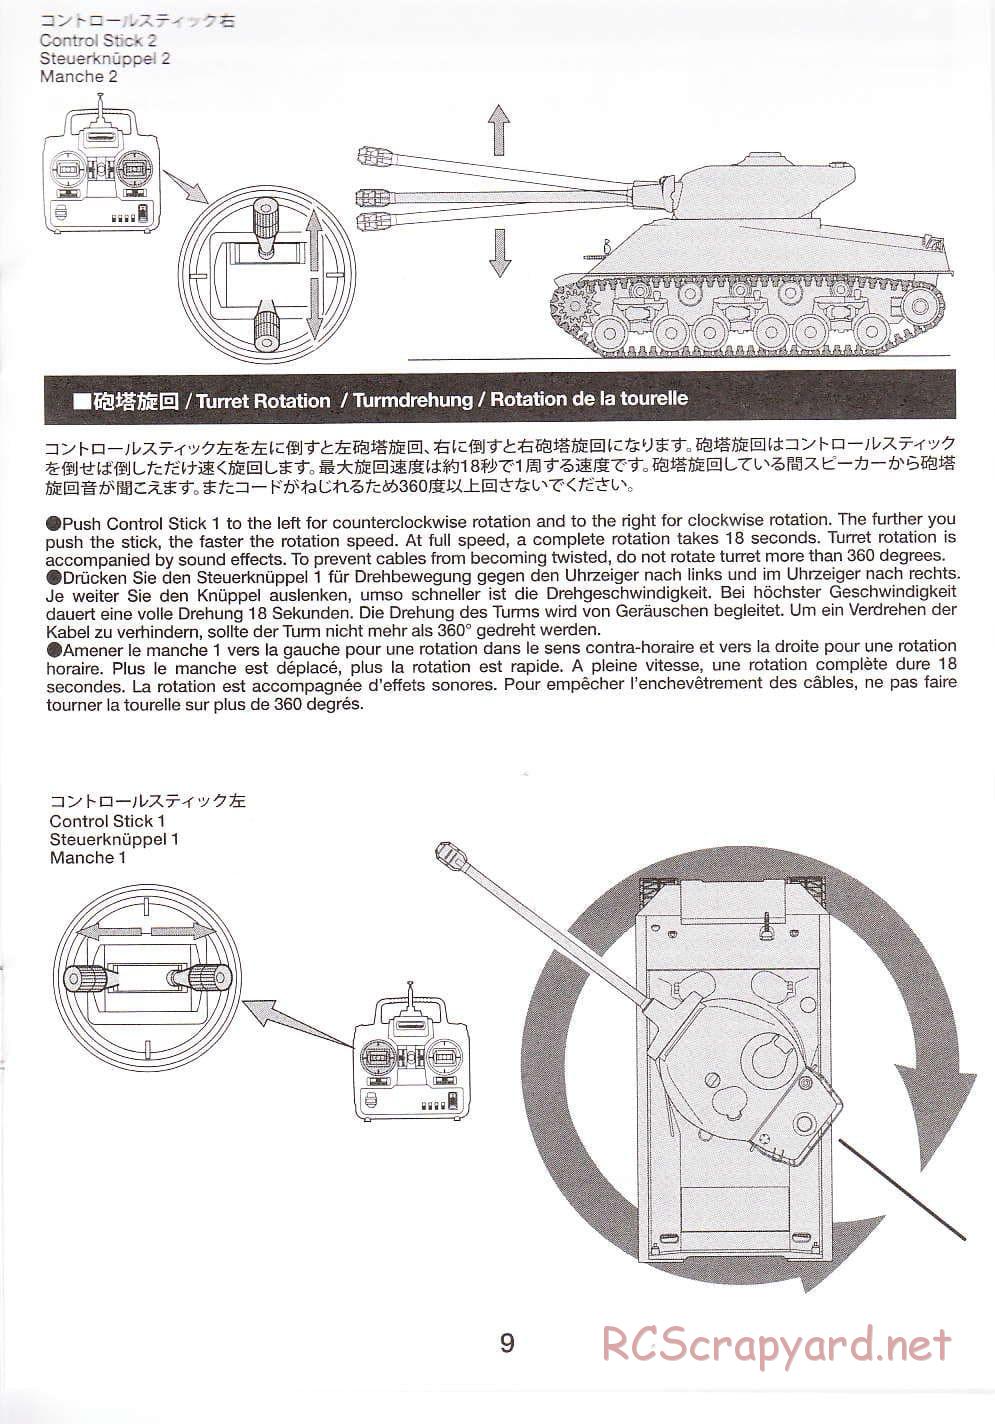 Tamiya - Super Sherman M-51 - 1/16 Scale Chassis - Operation Manual - Page 9